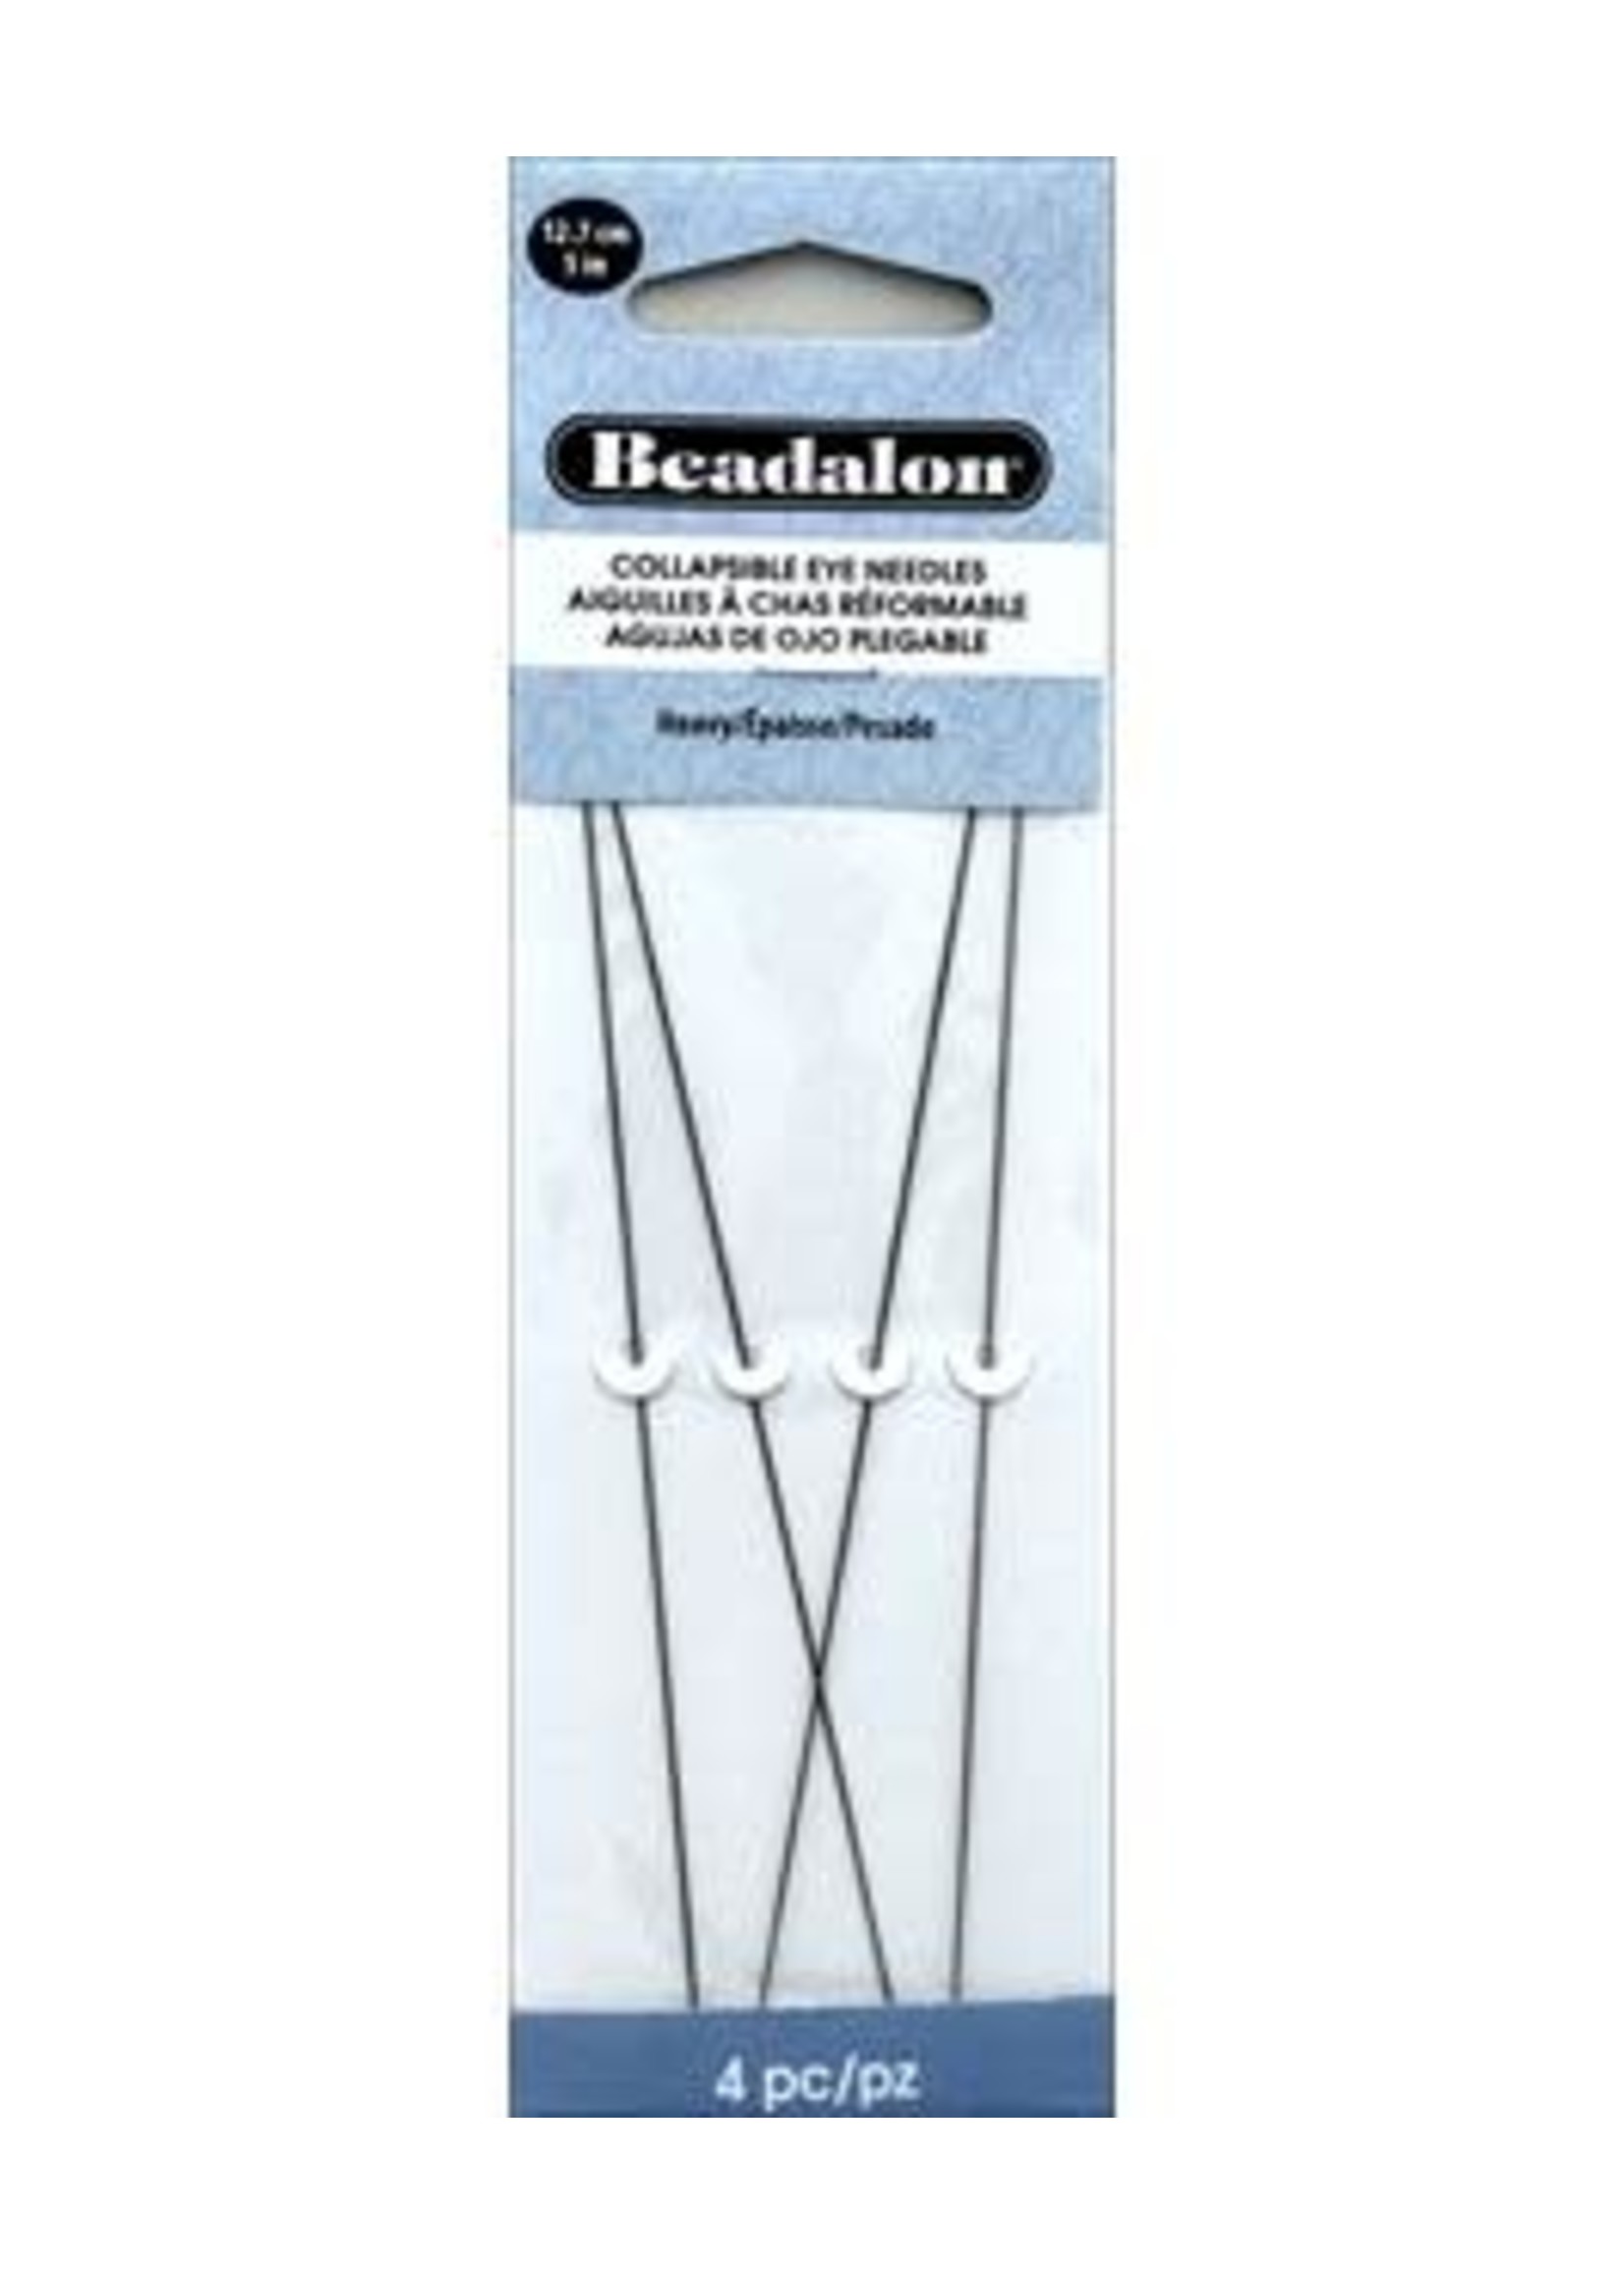 Beadalon Beading Needles Collapsible Eye Heavy 5" 4pc